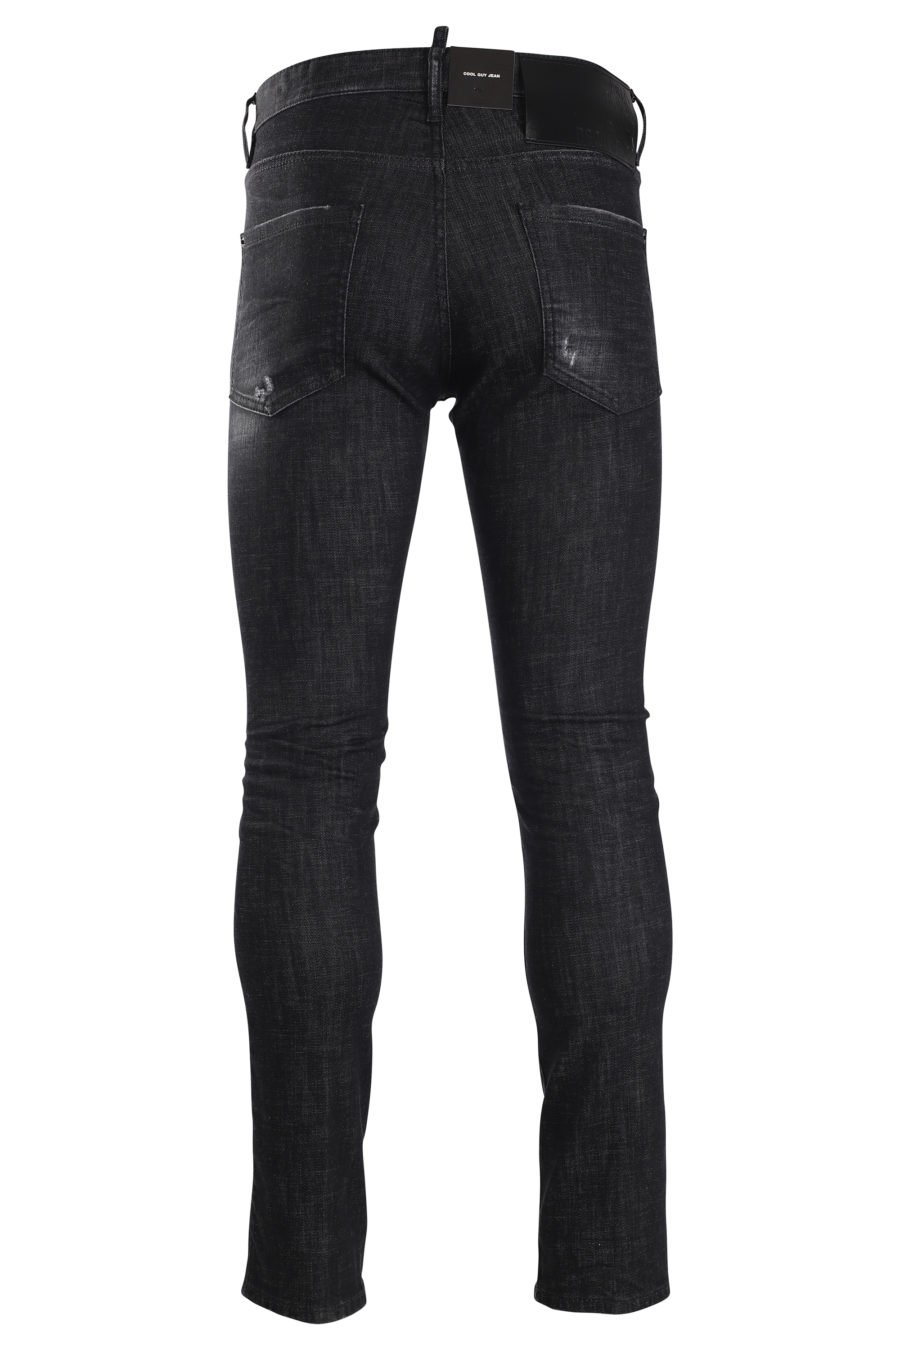 Jeans "ibra cool guy" black - IMG 9981